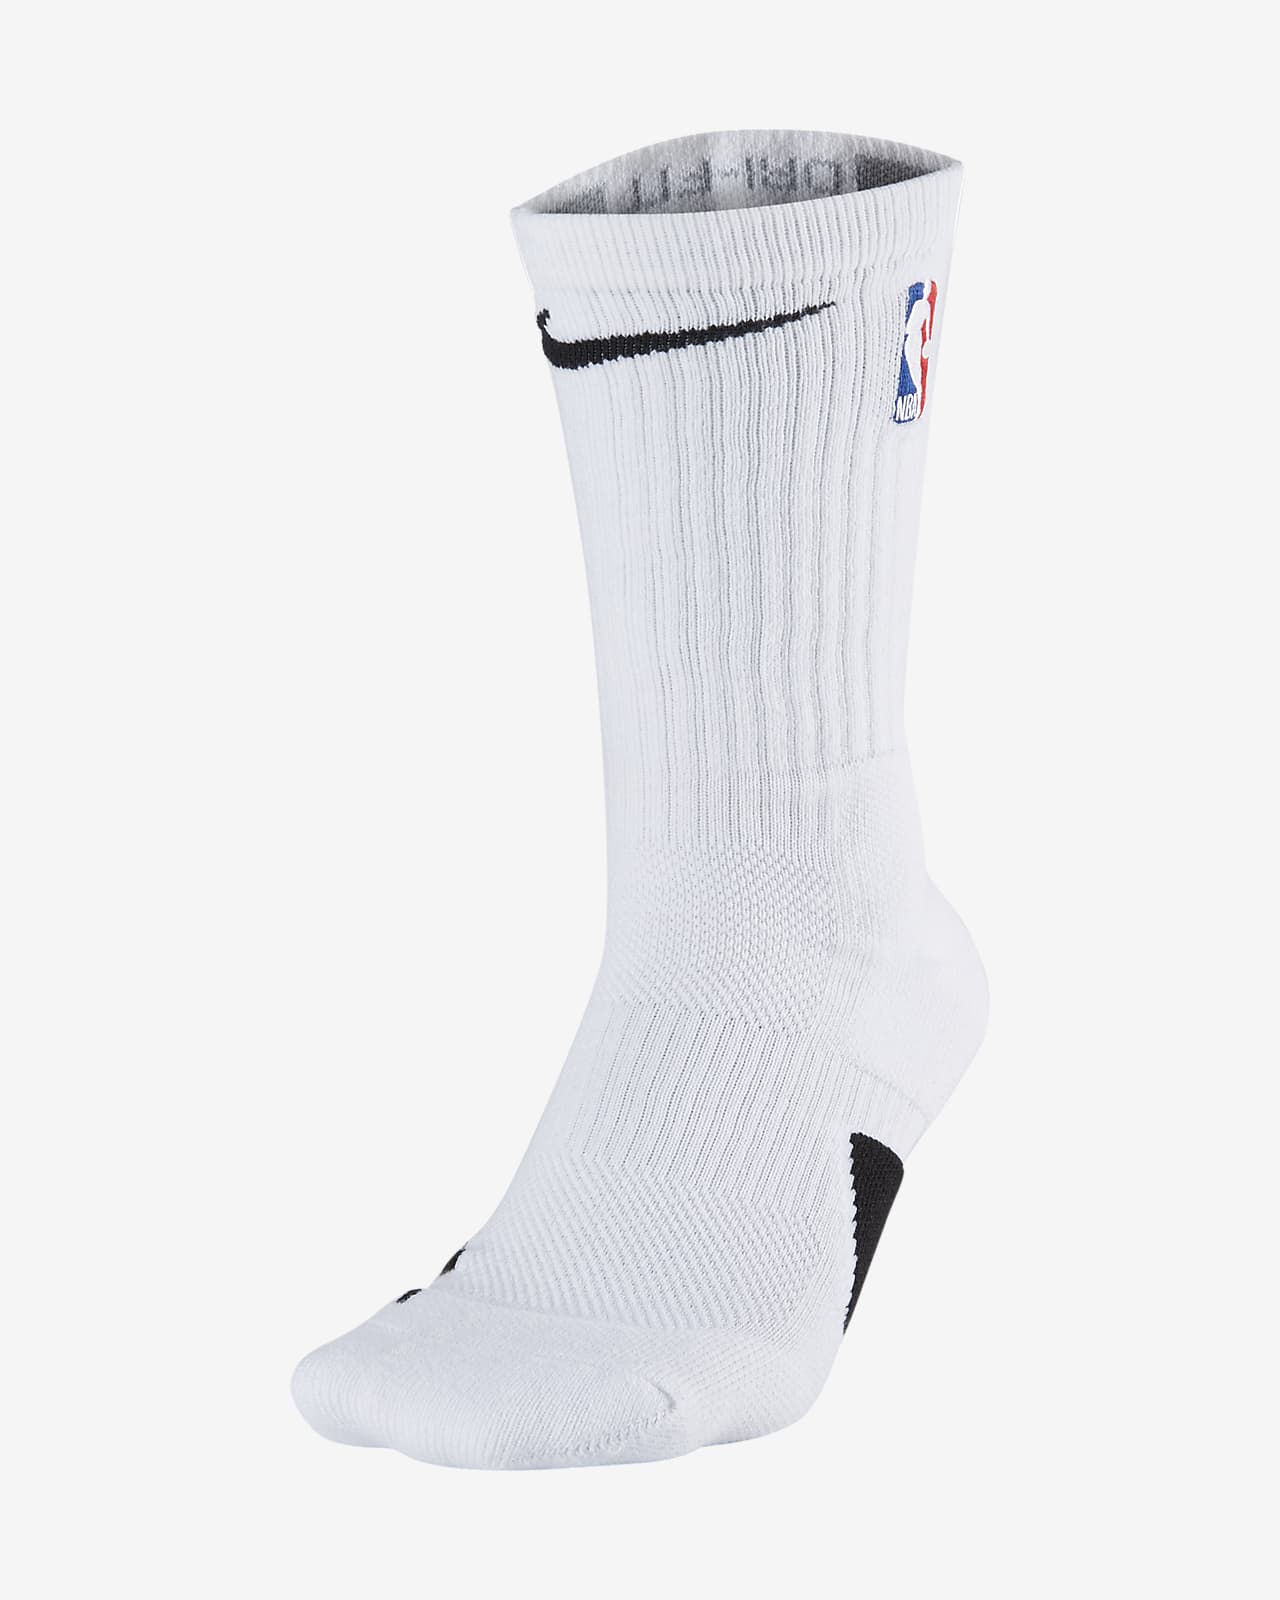 Nike Elite NBA 中筒襪